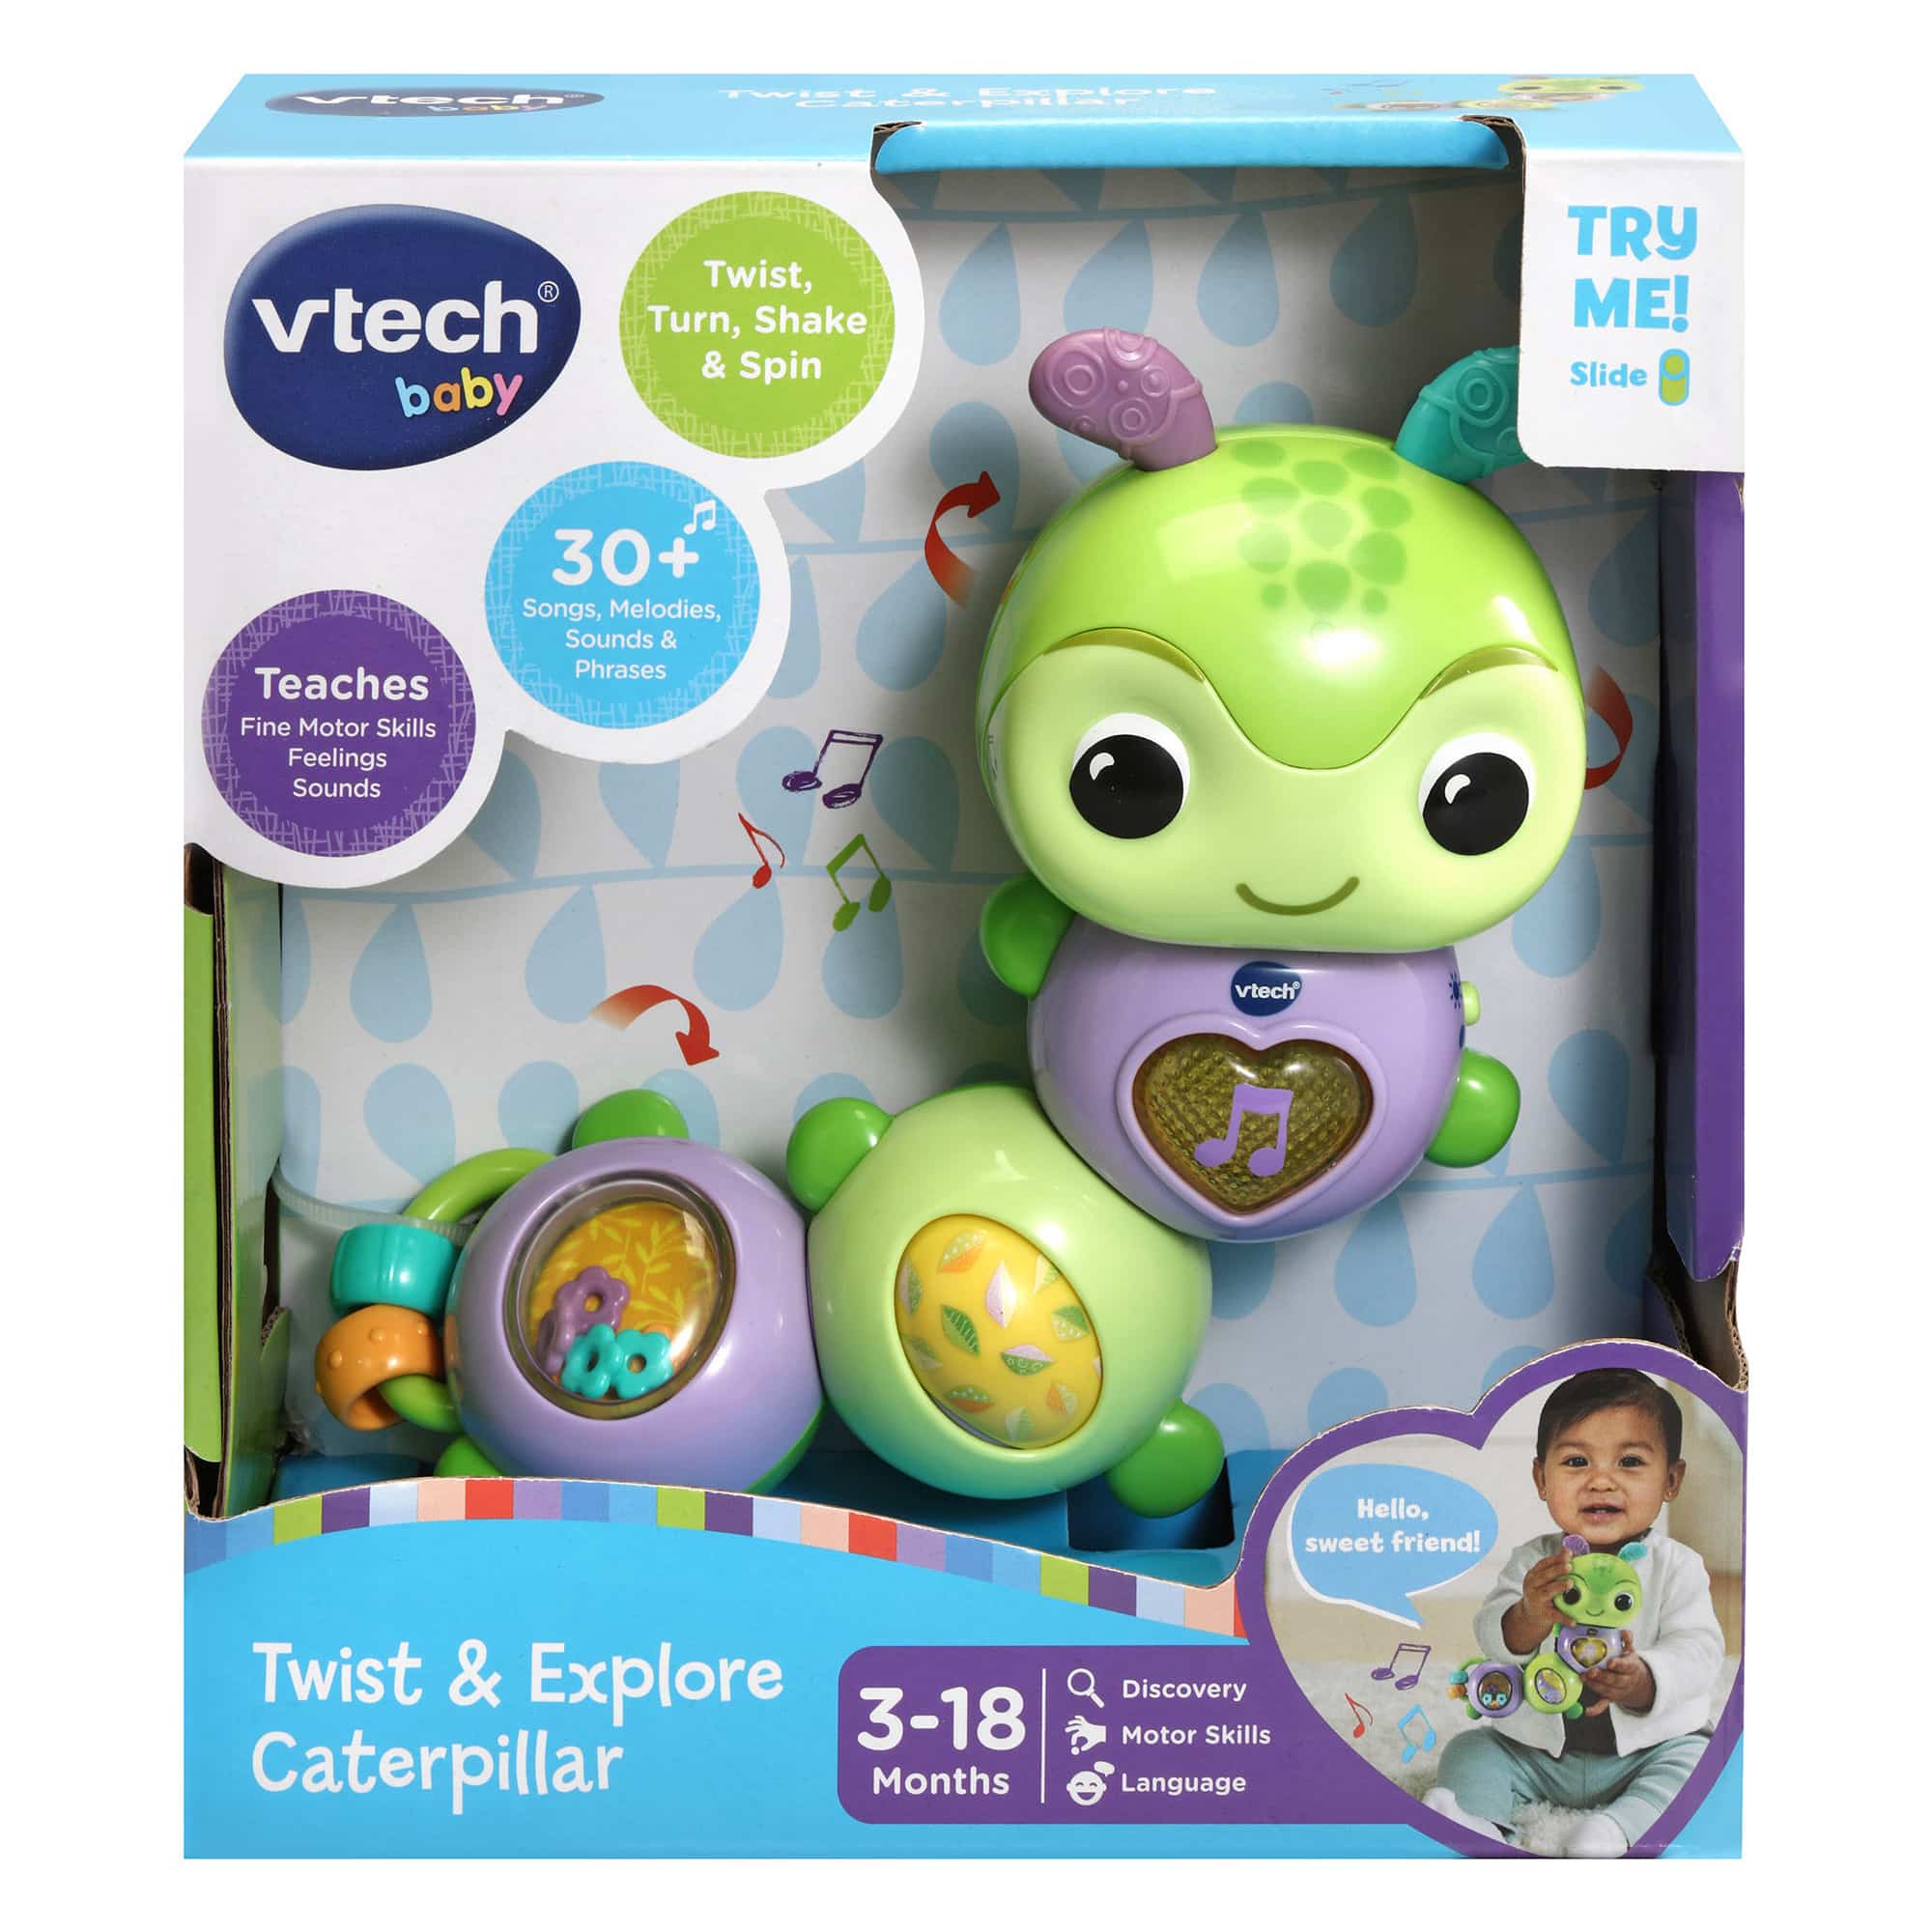 Vtech Baby - Twist & Explore Caterpillar